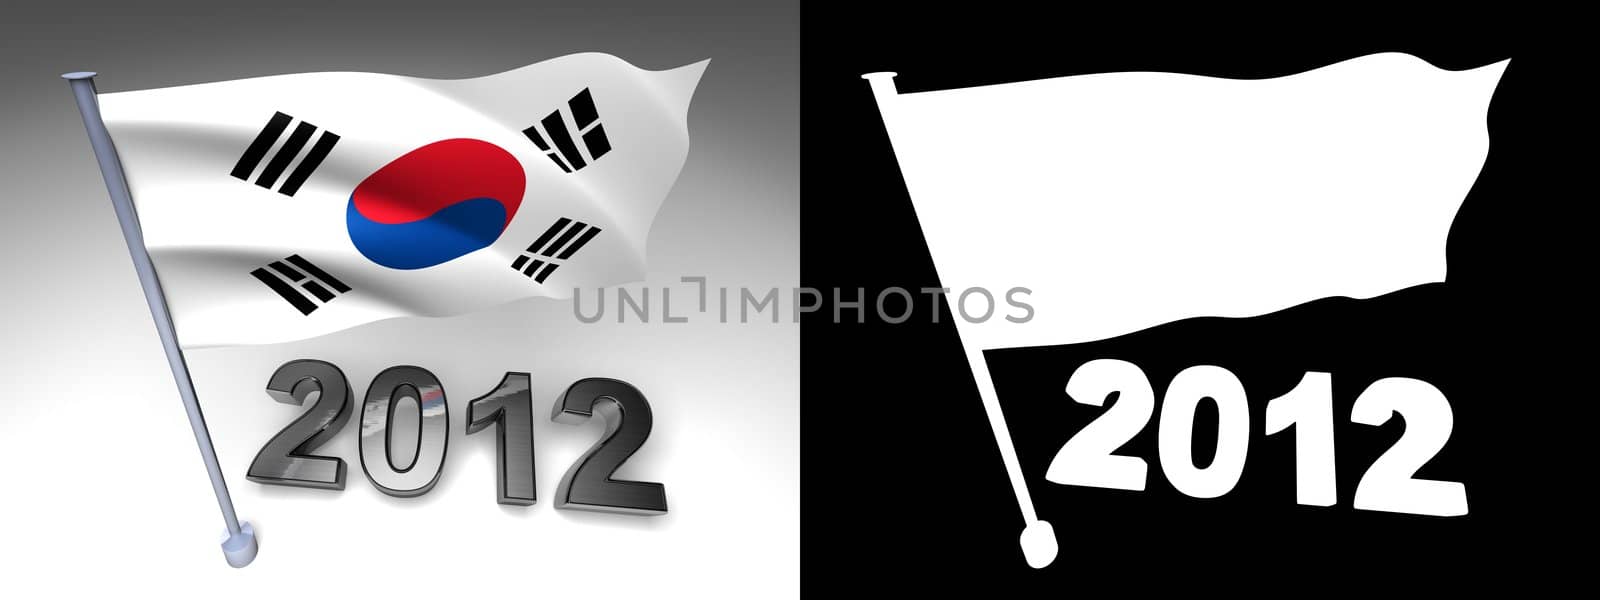 2012 design and South Korea flag on a pole by shkyo30